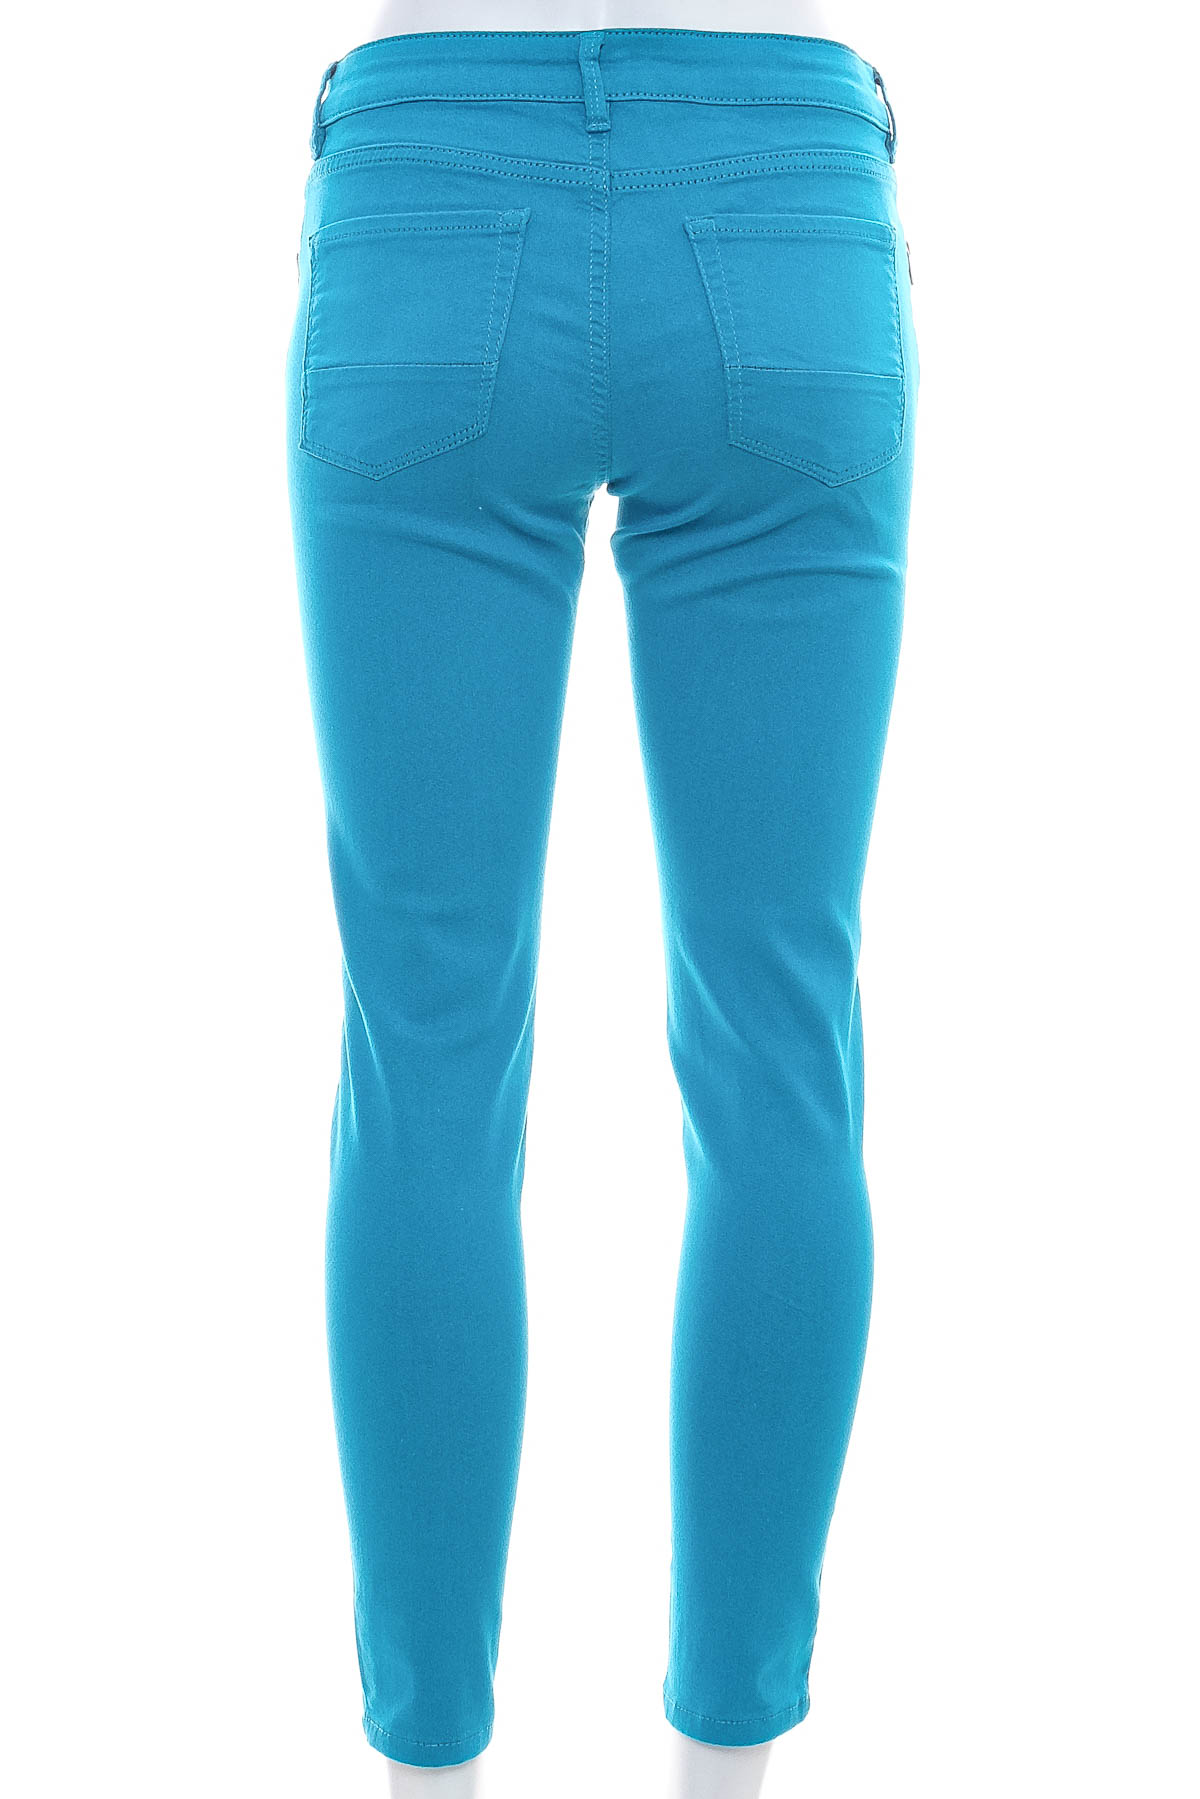 Pantaloni de damă - Orsay - 1